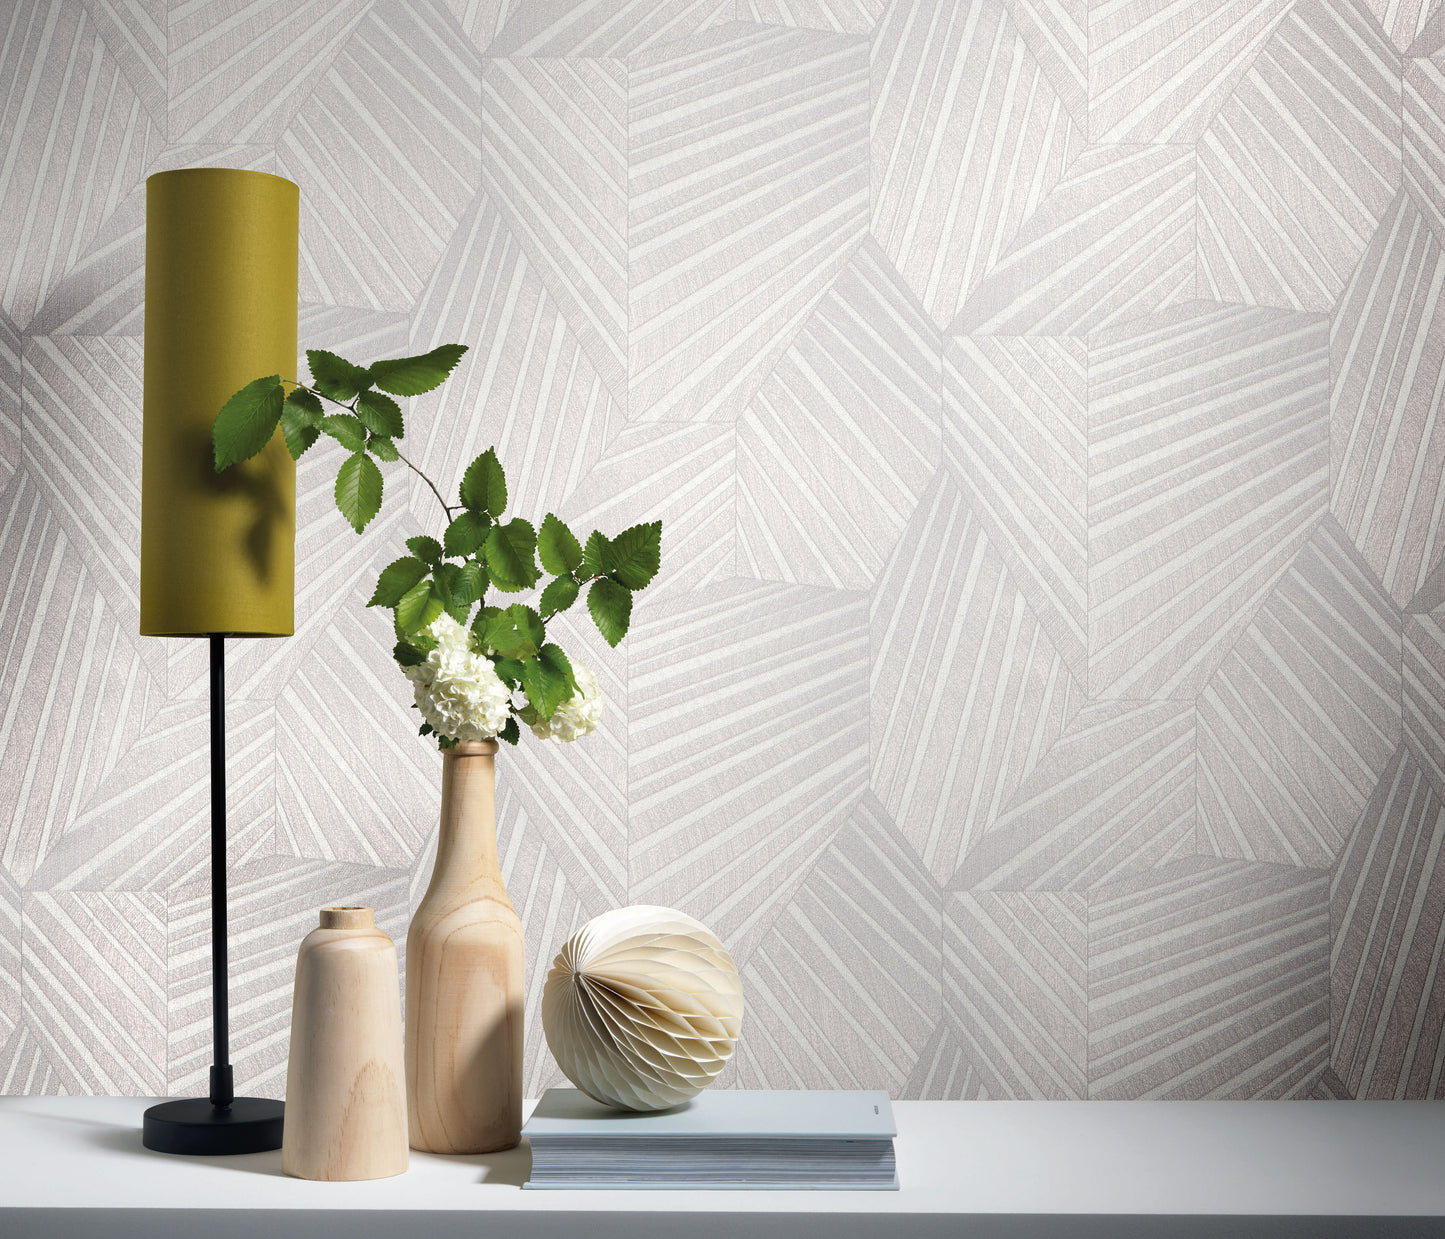 Modern Gemstone Geometric Textured Wallpaper